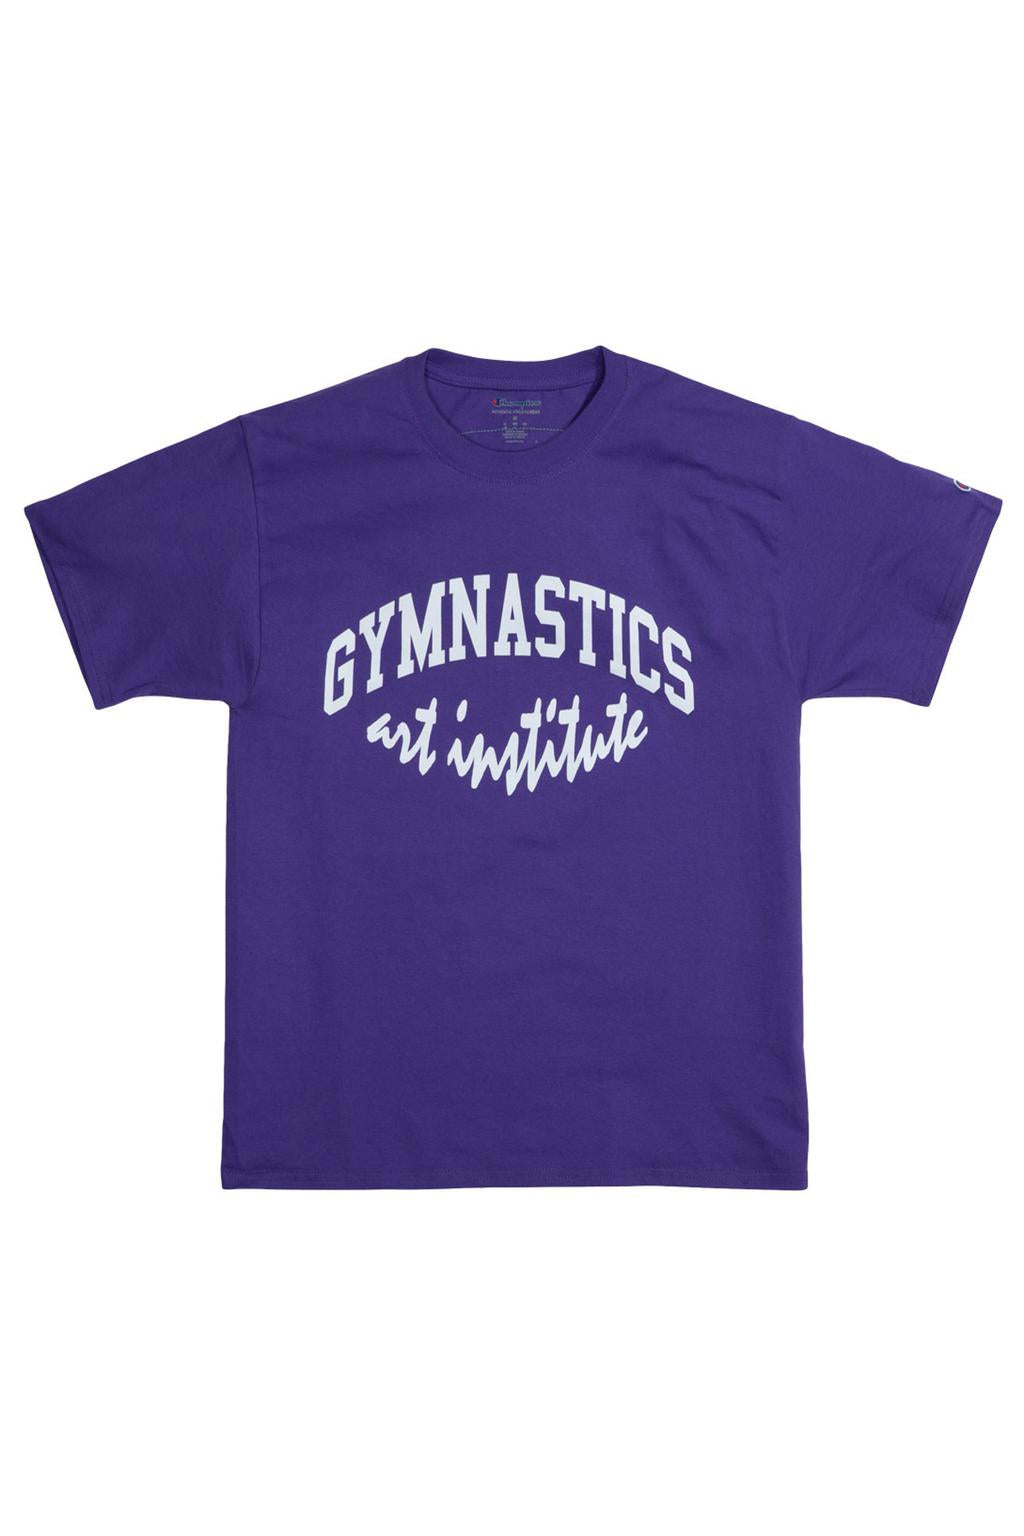 Virgil Abloh Brooklyn Museum Gymnastics Art Institute T-shirt Purple - Sole  Cart